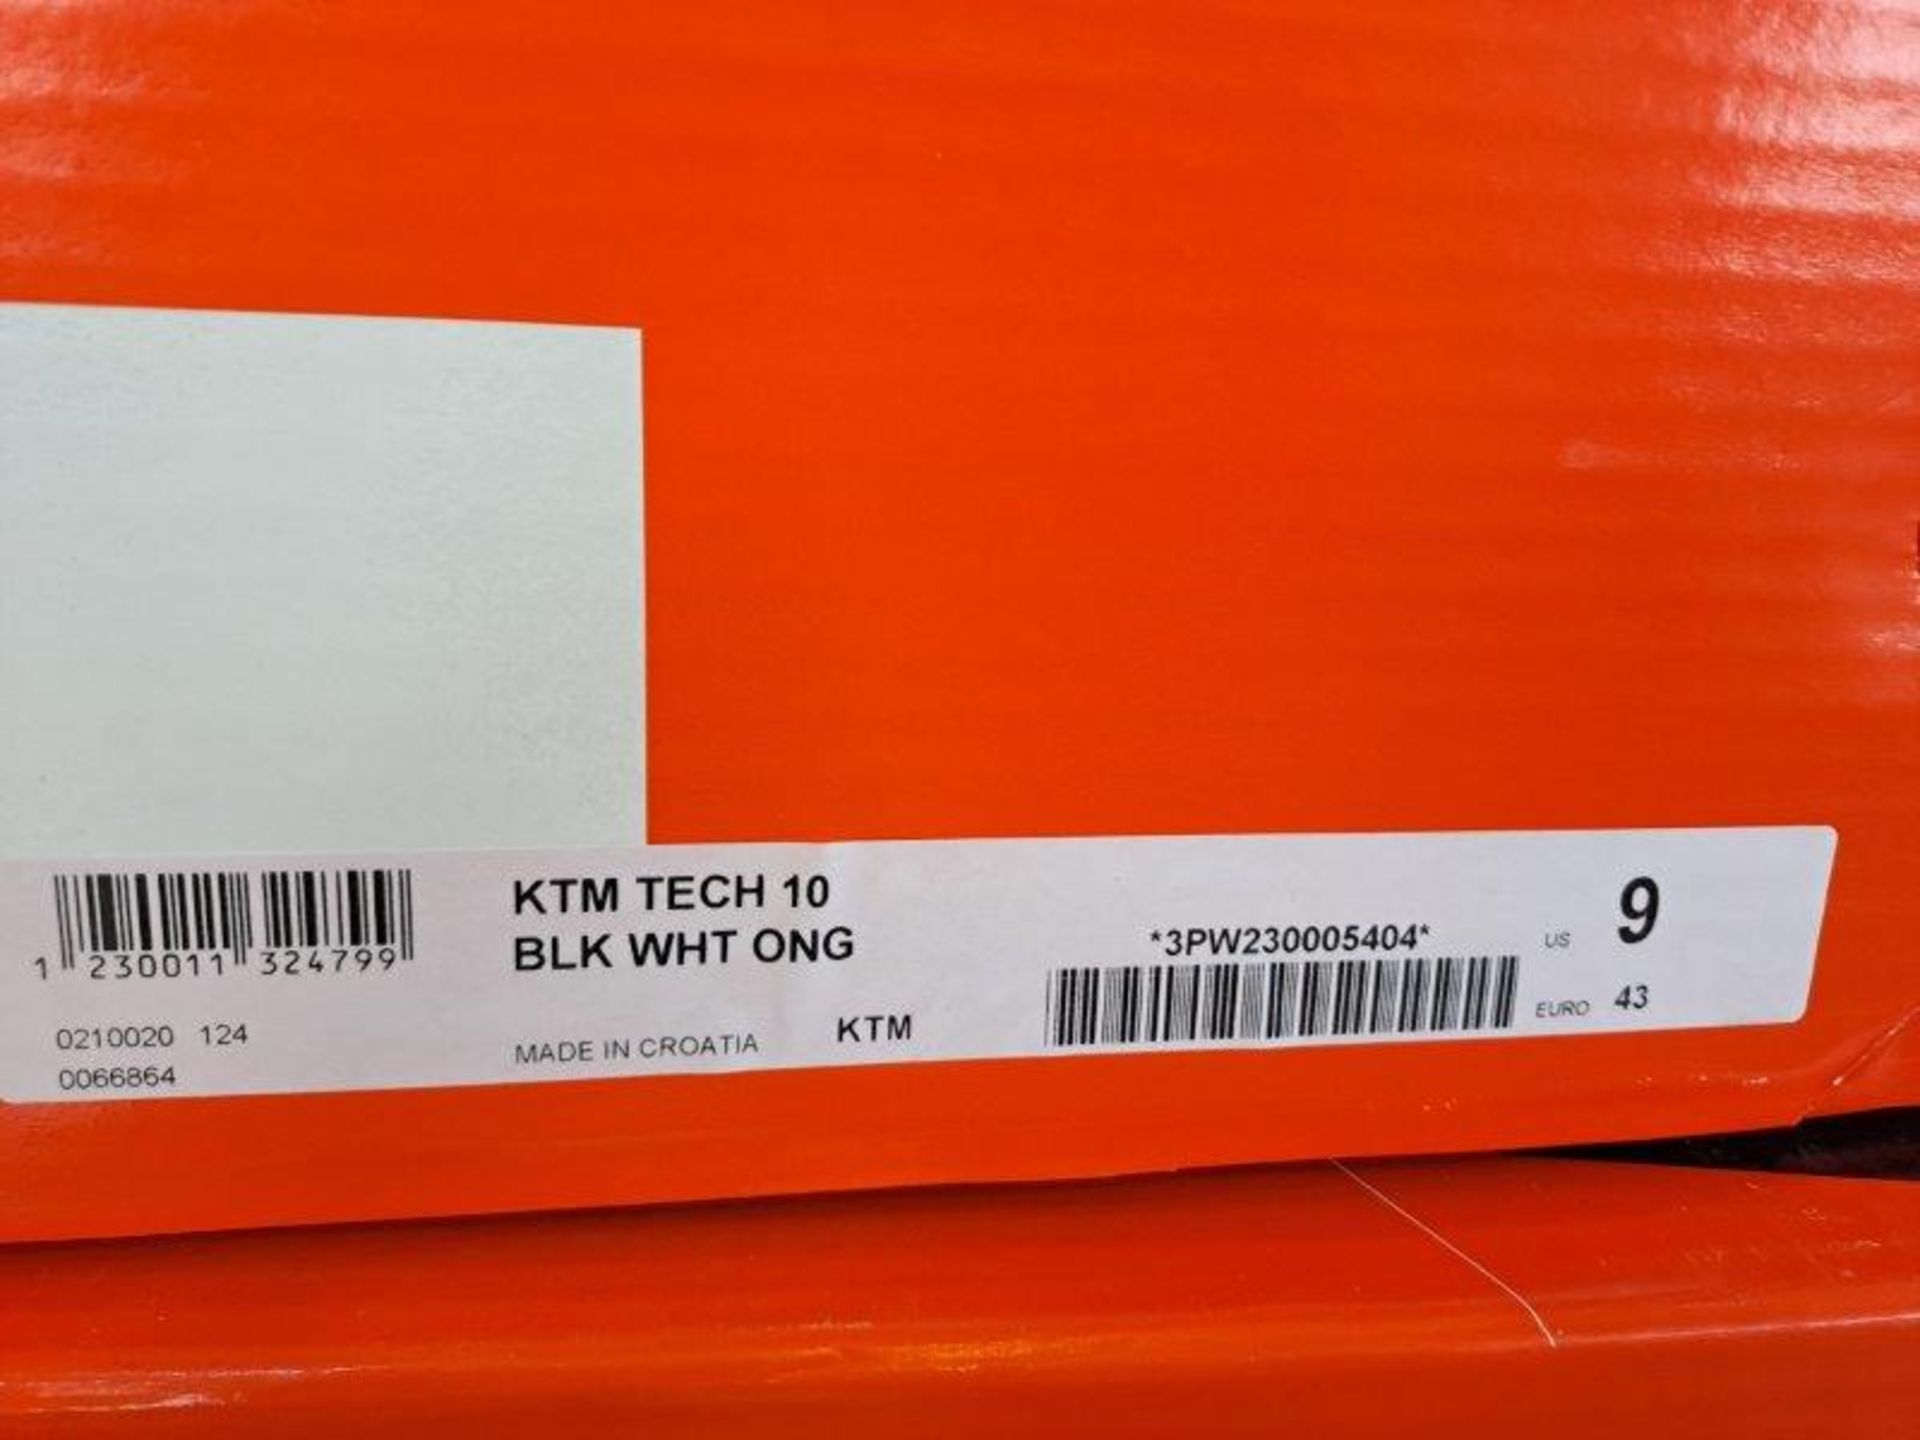 KTM Tech 10 Euro 43 Motorbike Boots - Image 3 of 6